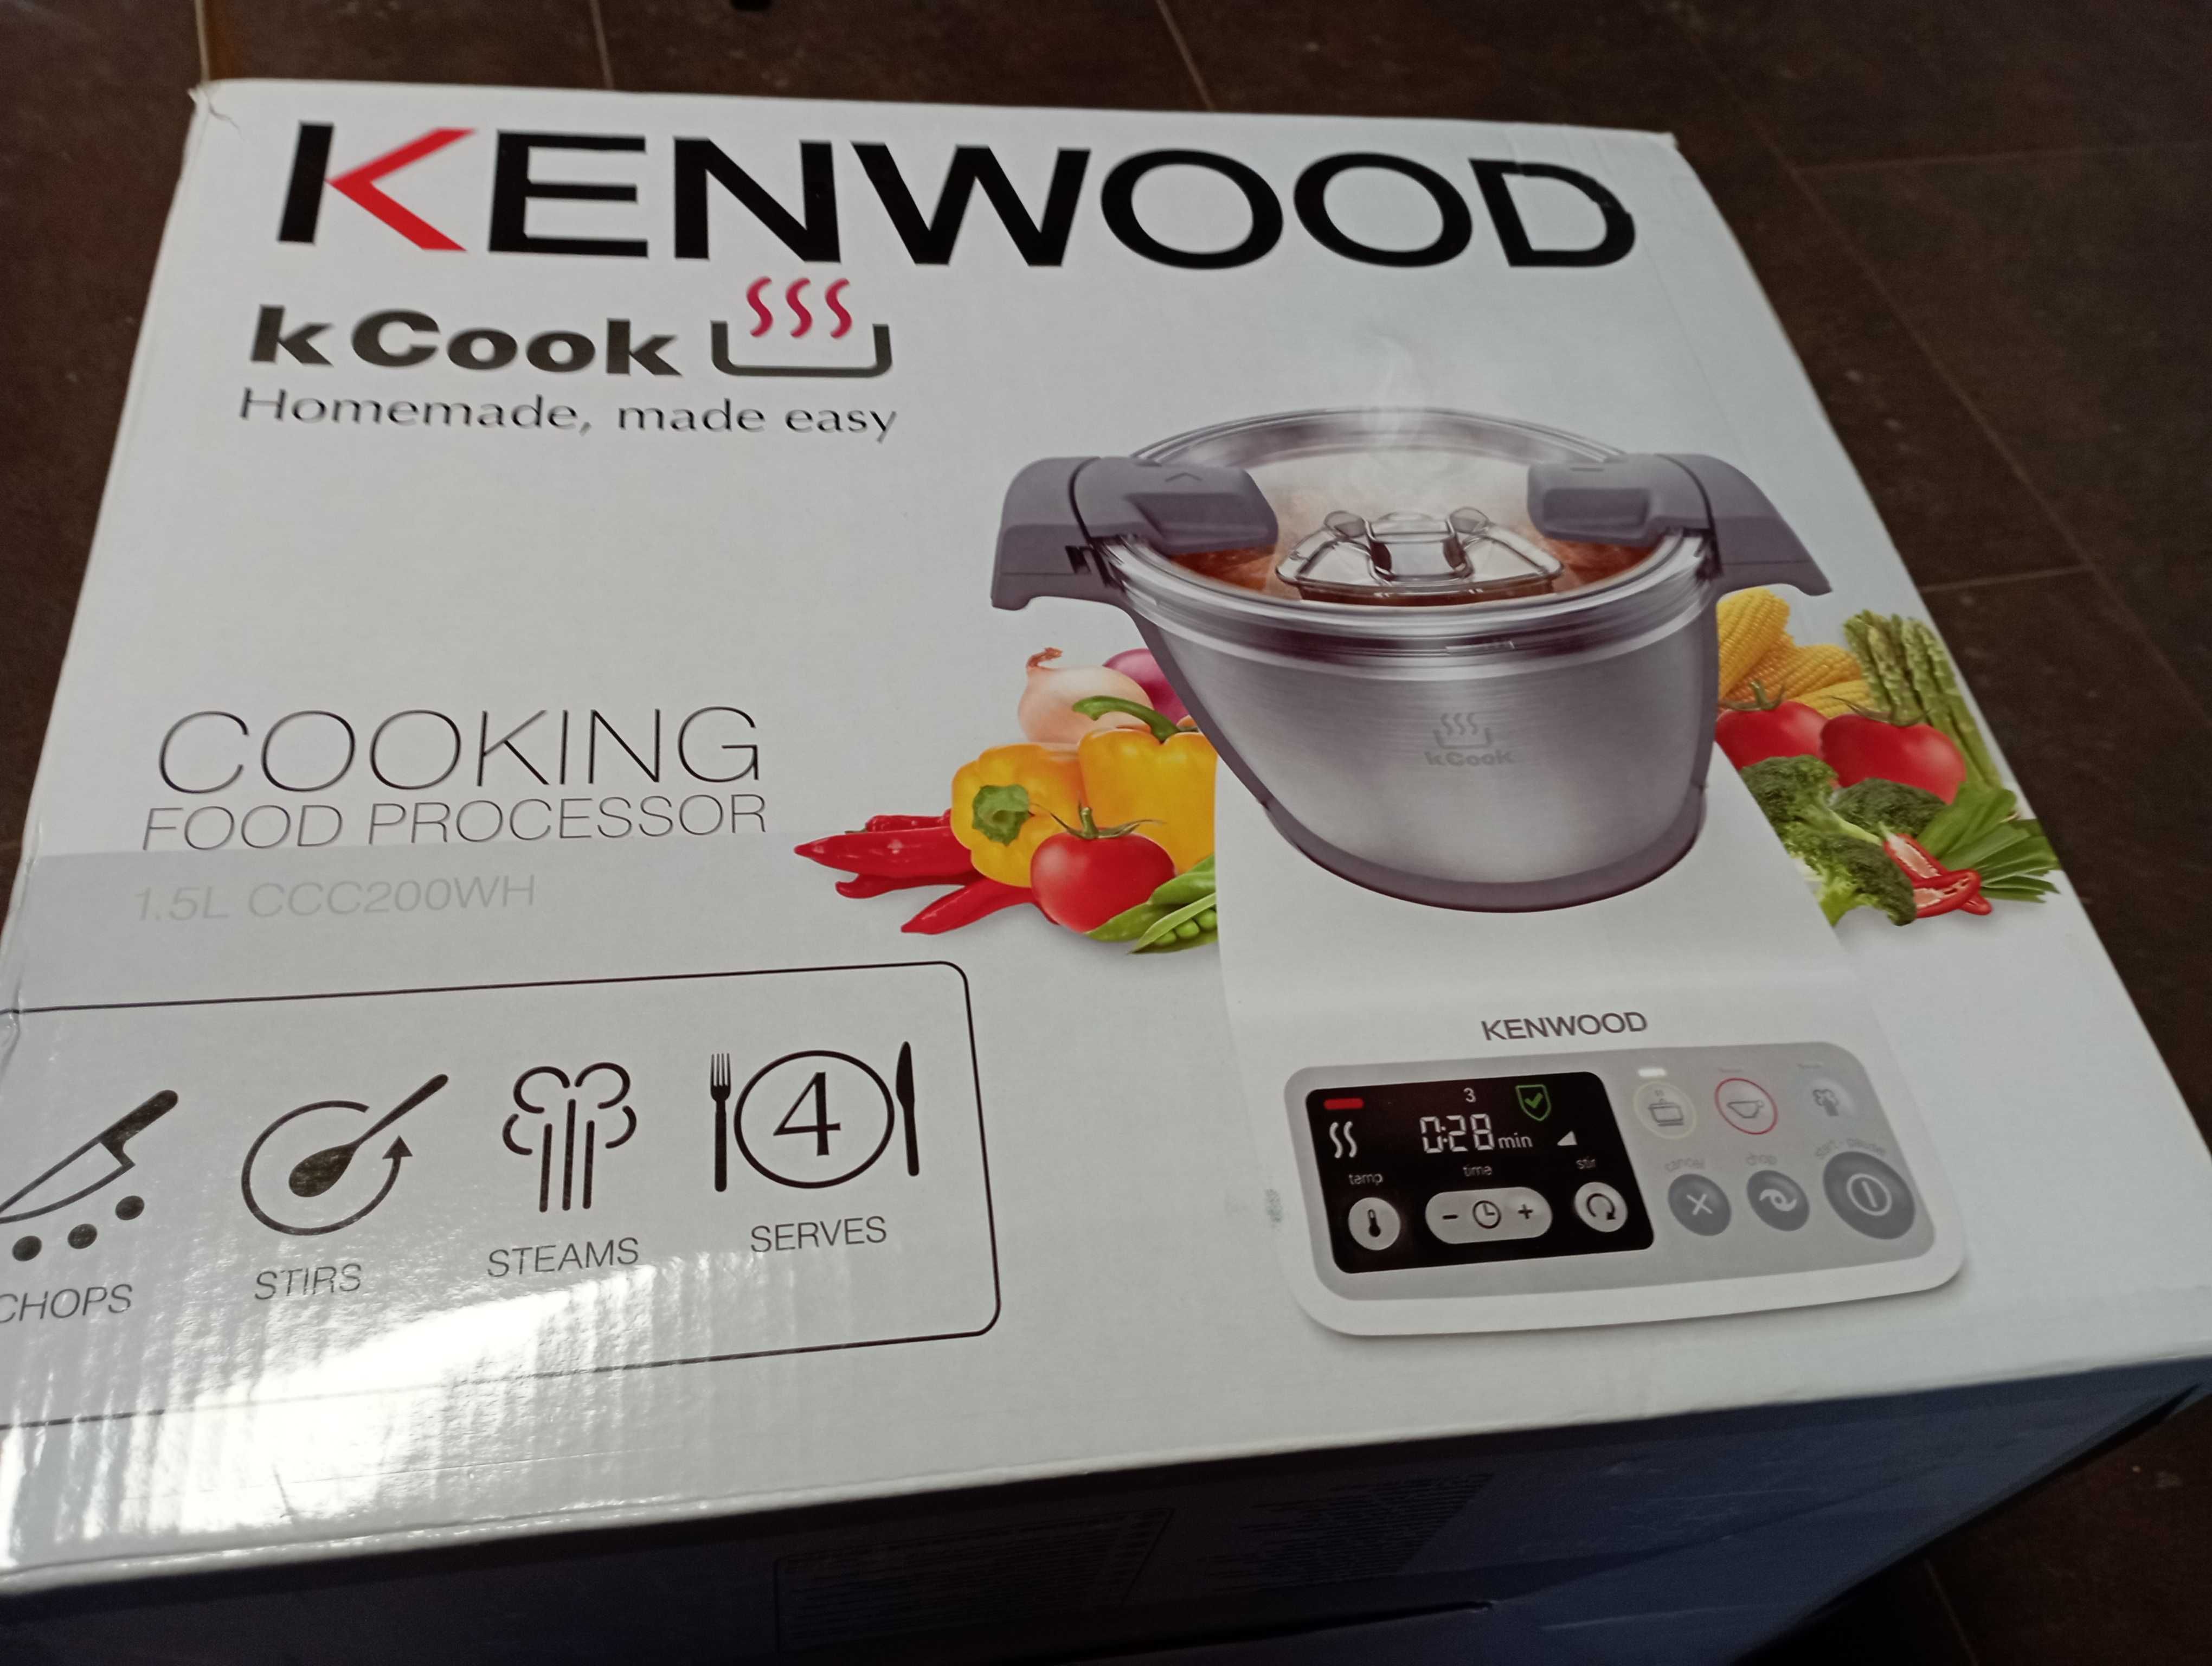 Kenwood k Cook garnek elektryczny